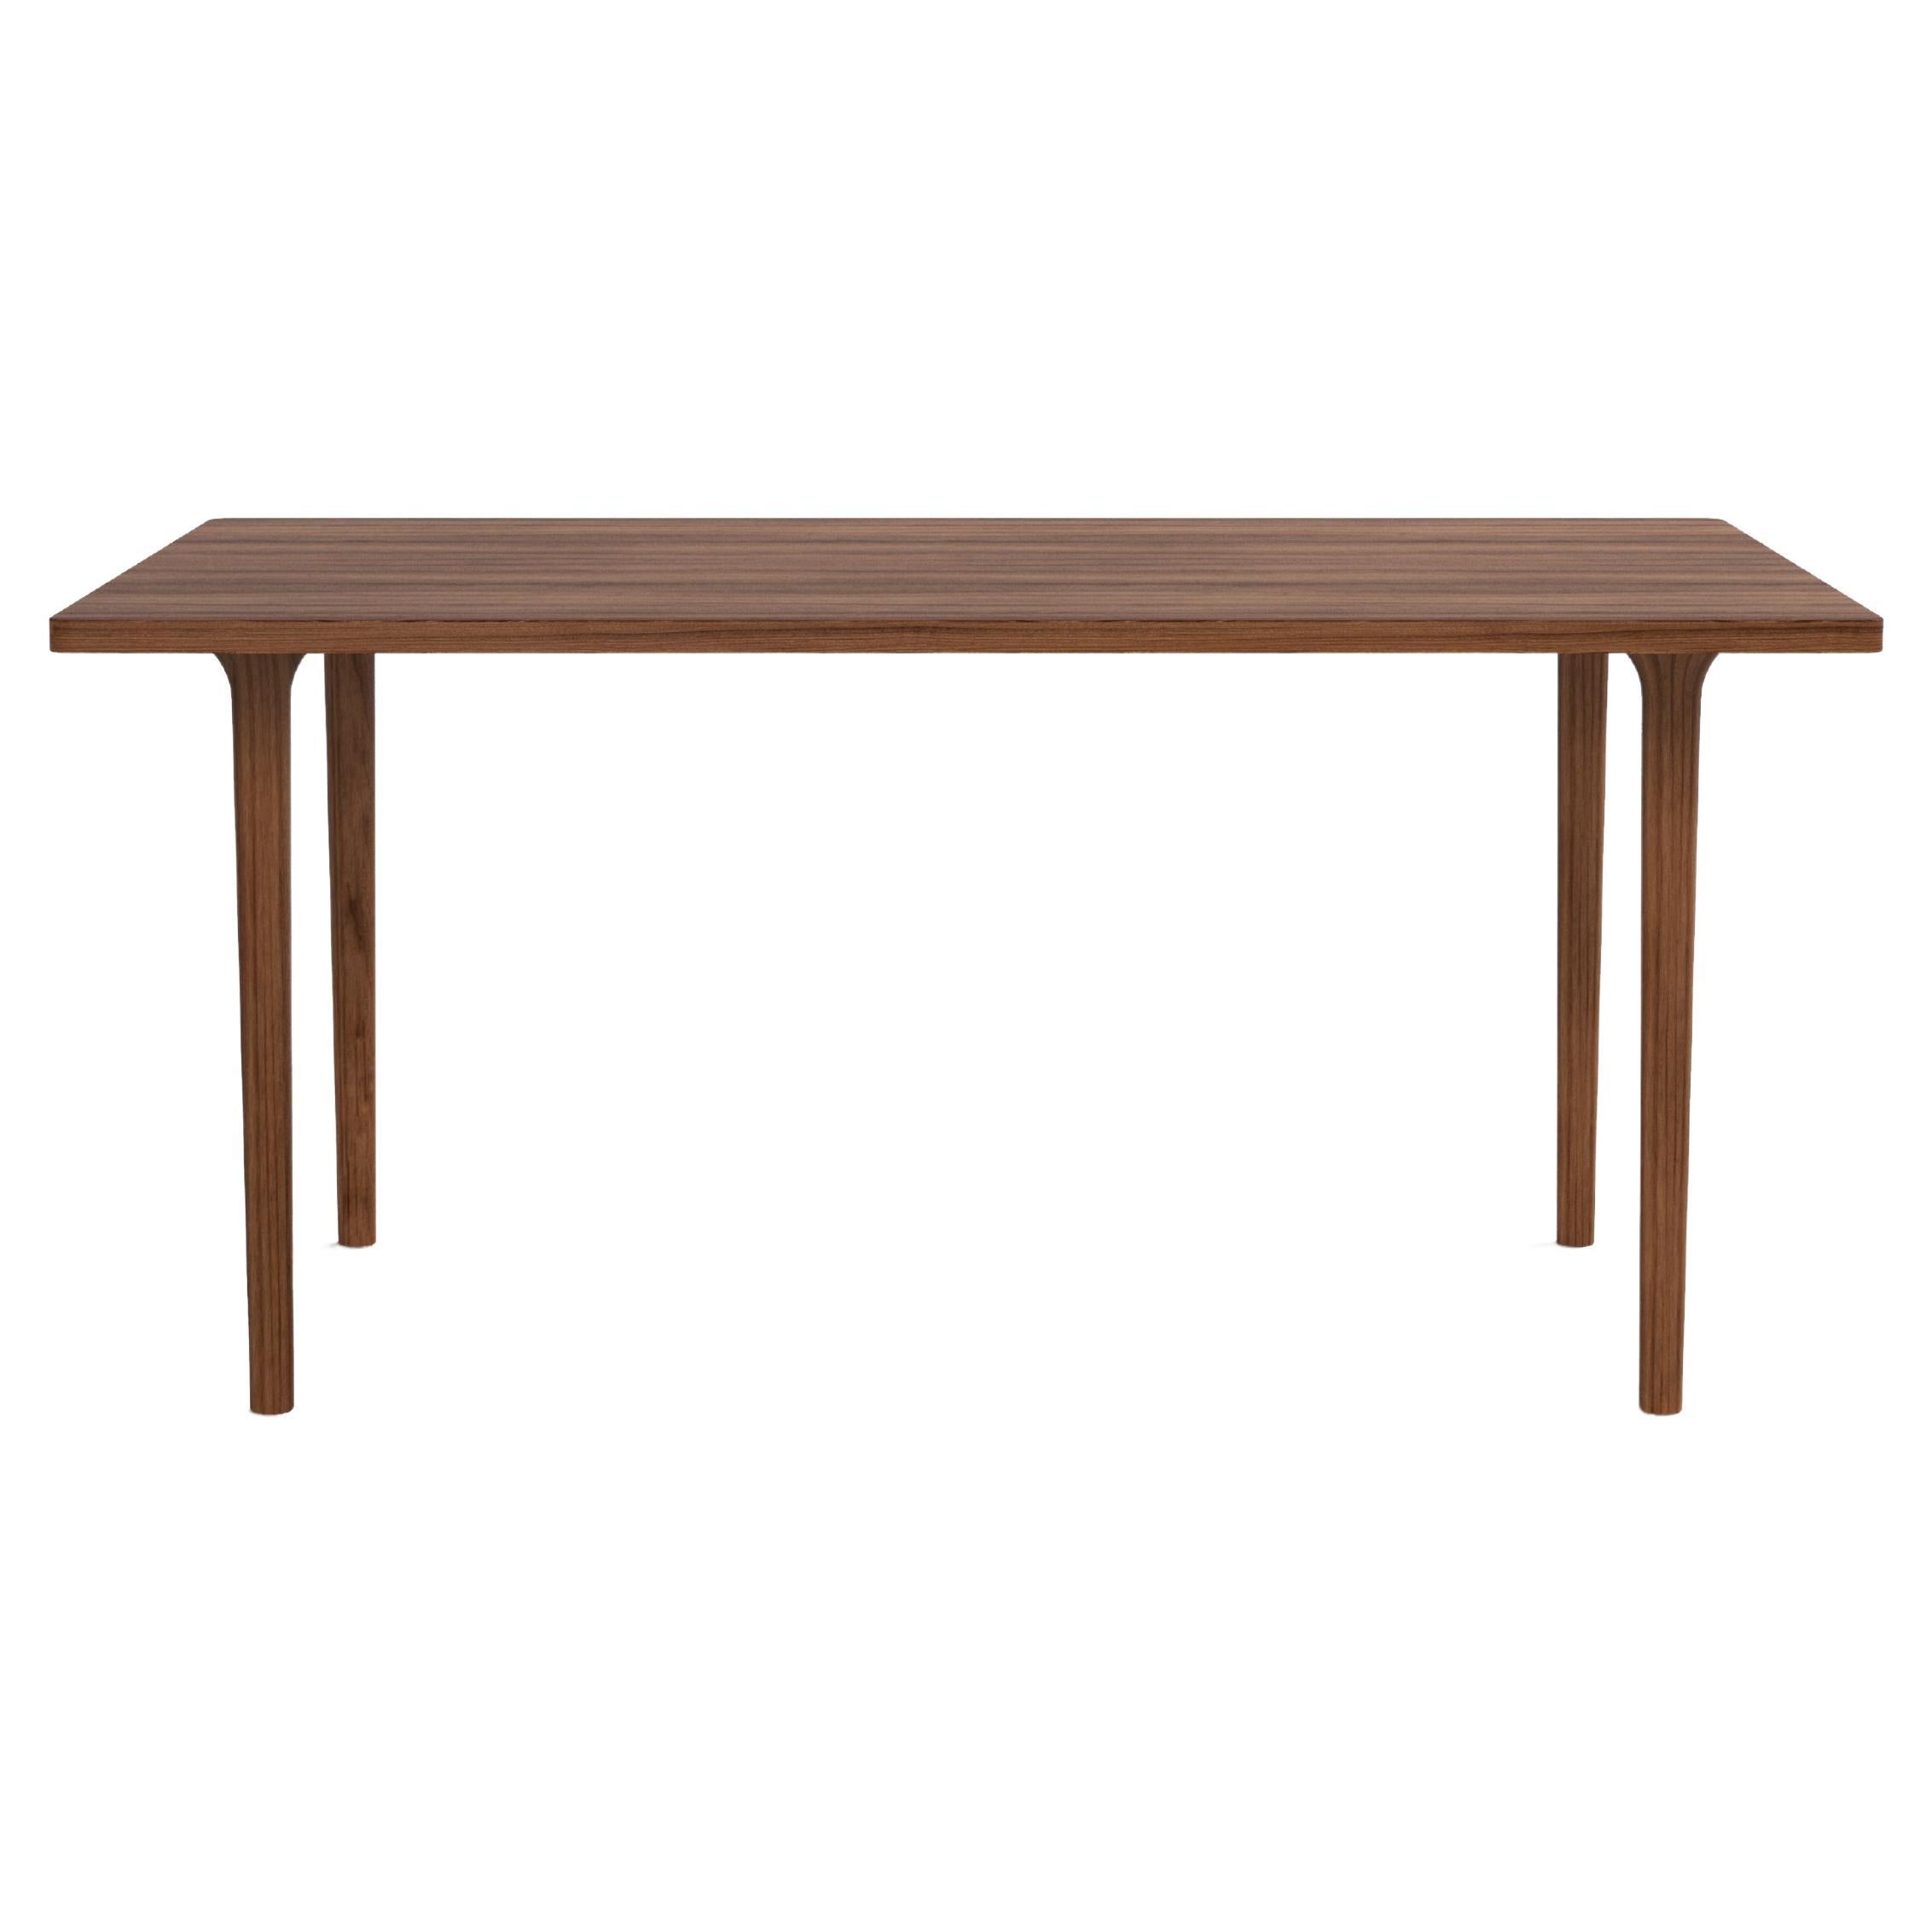 Minimalist Modern Table in Walnut Wood Rectangular For Sale